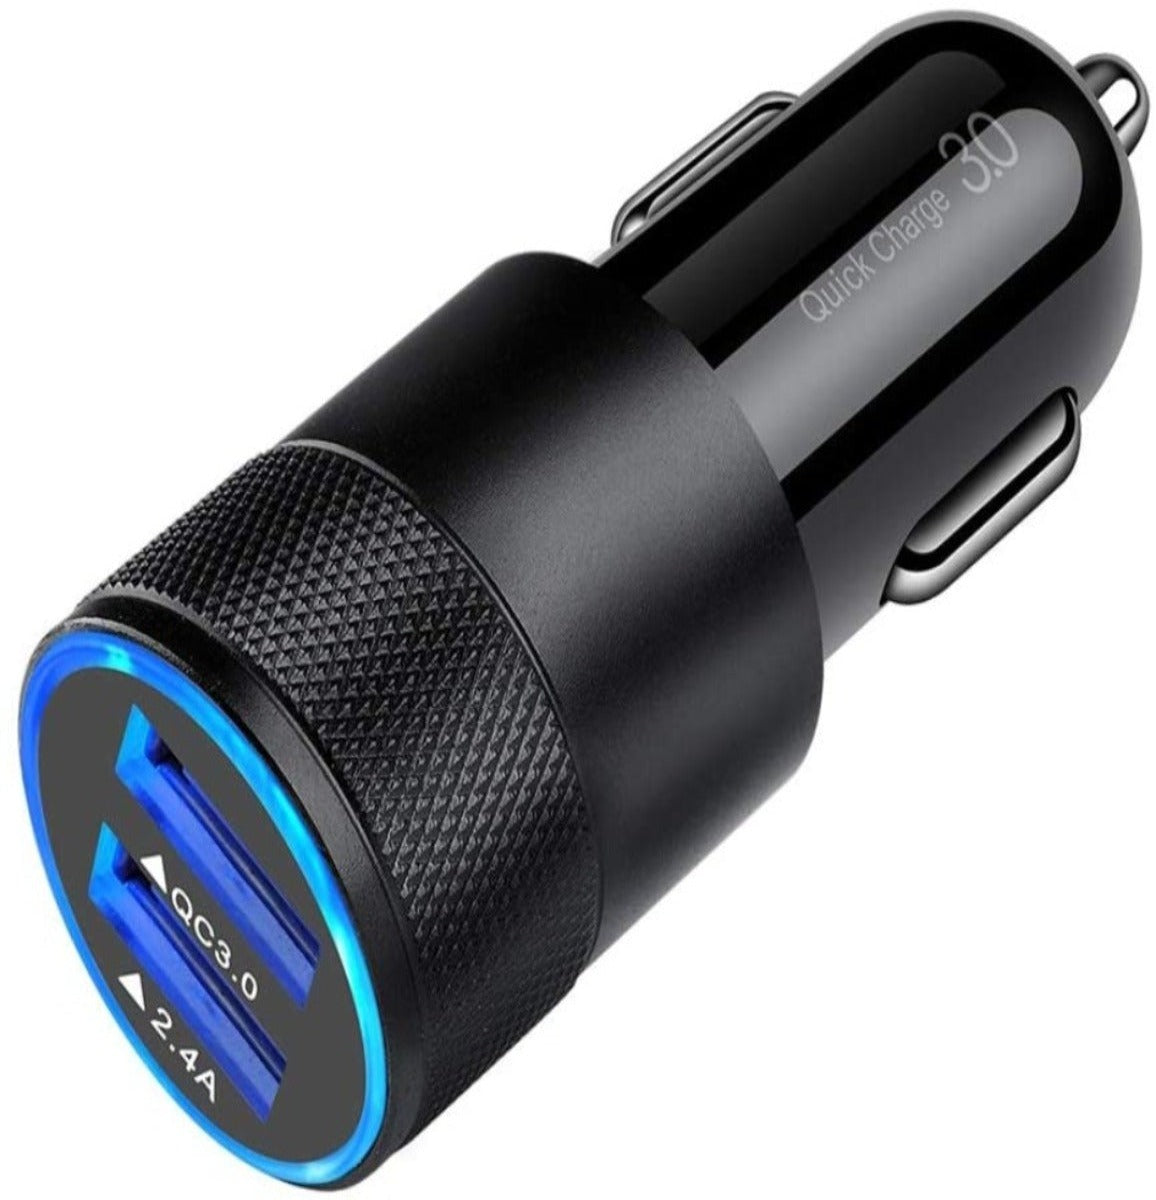 RECAR - Fast car cigarette lighter charger with 5 USB ports – ecaparis